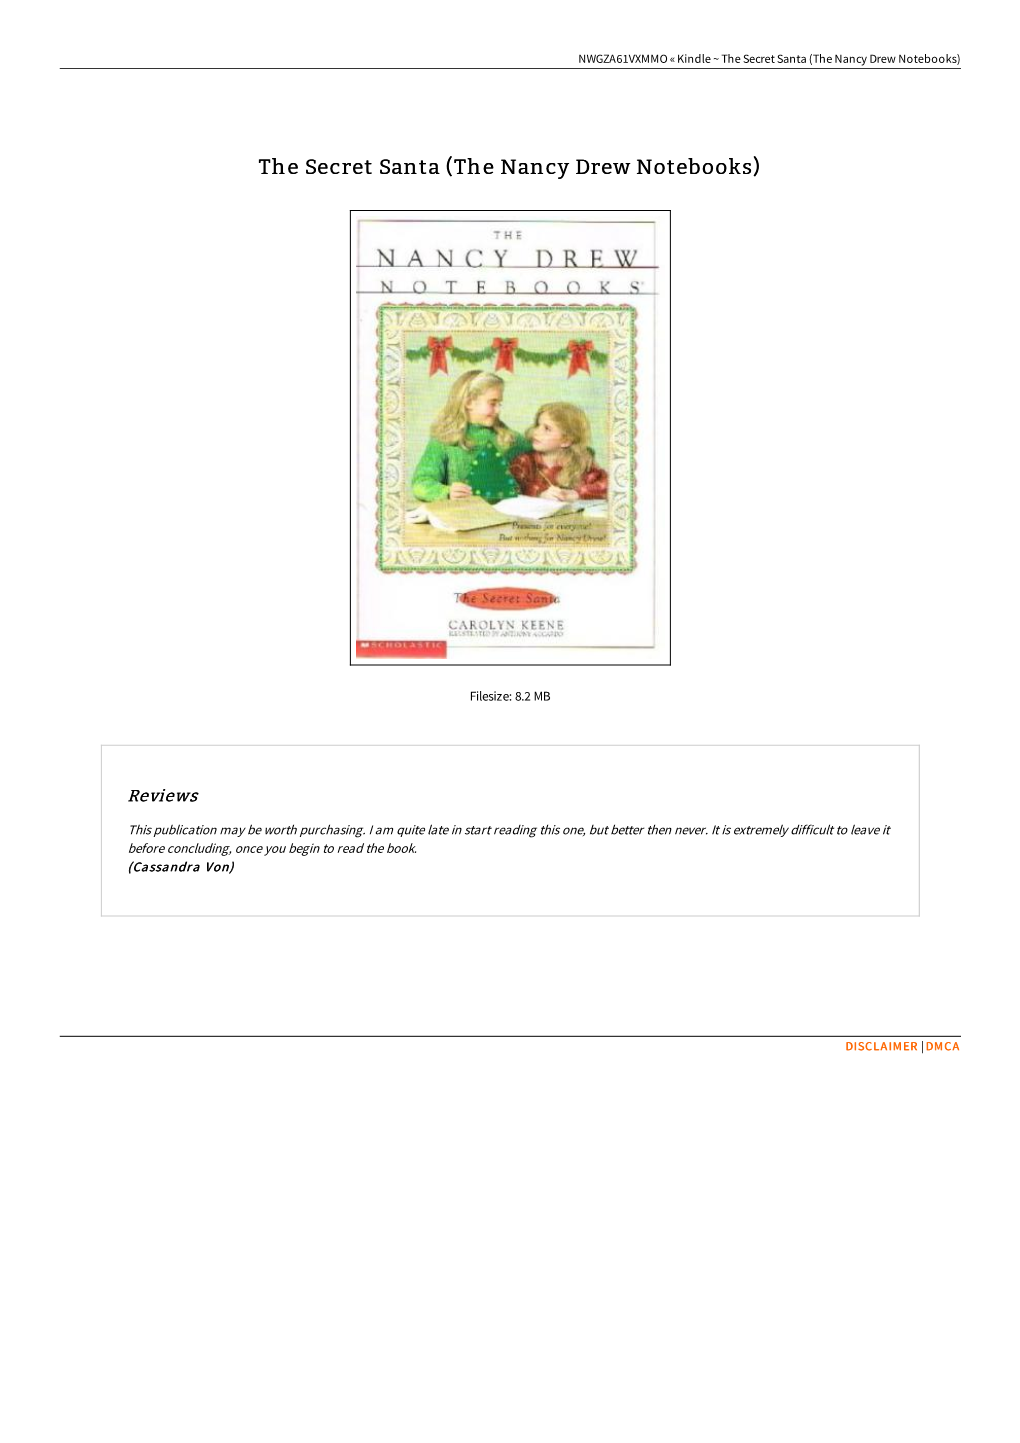 Download PDF &gt; the Secret Santa (The Nancy Drew Notebooks